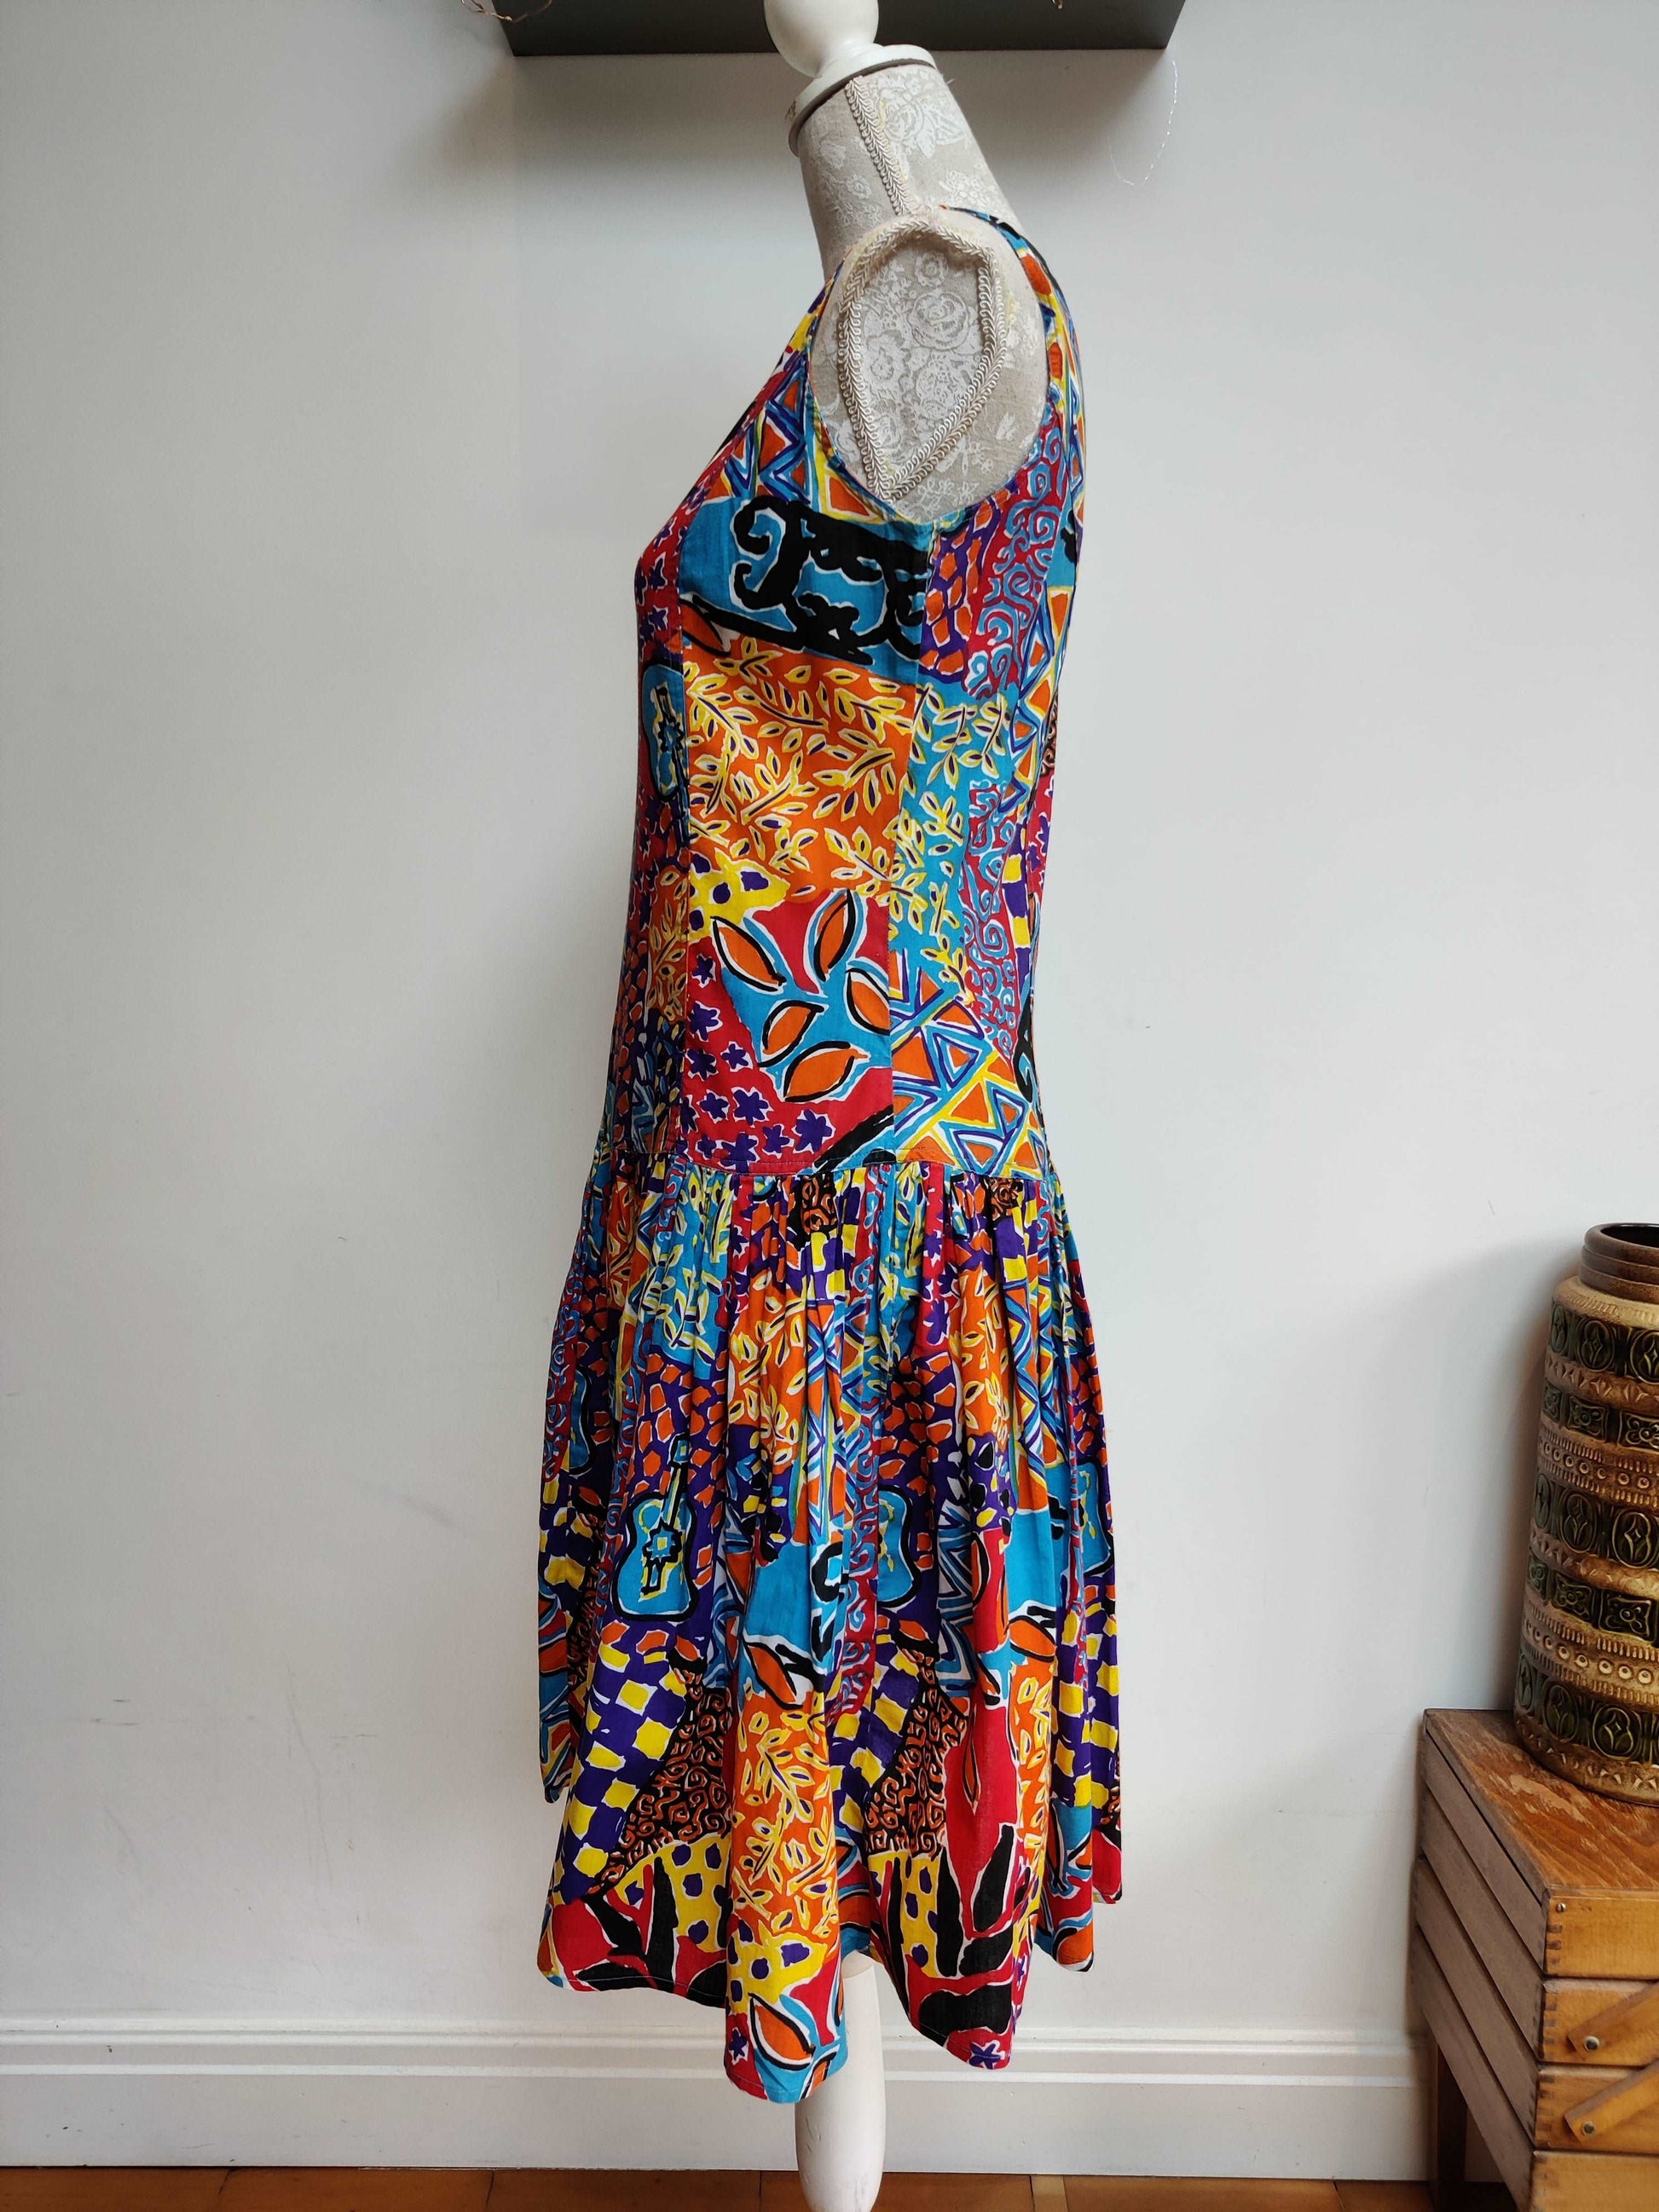 Colourful 80s midi dress